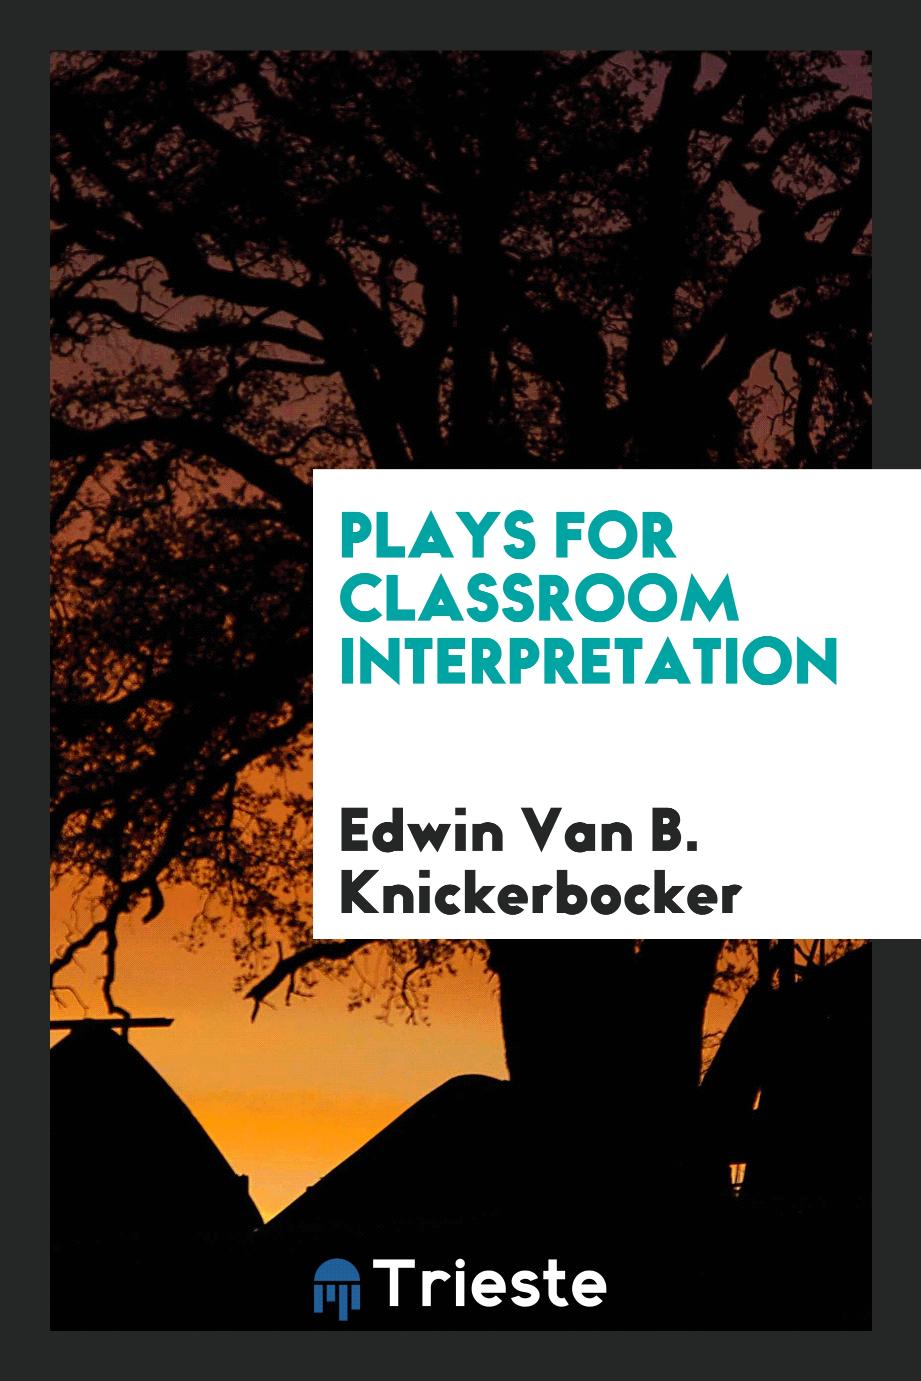 Plays for classroom interpretation